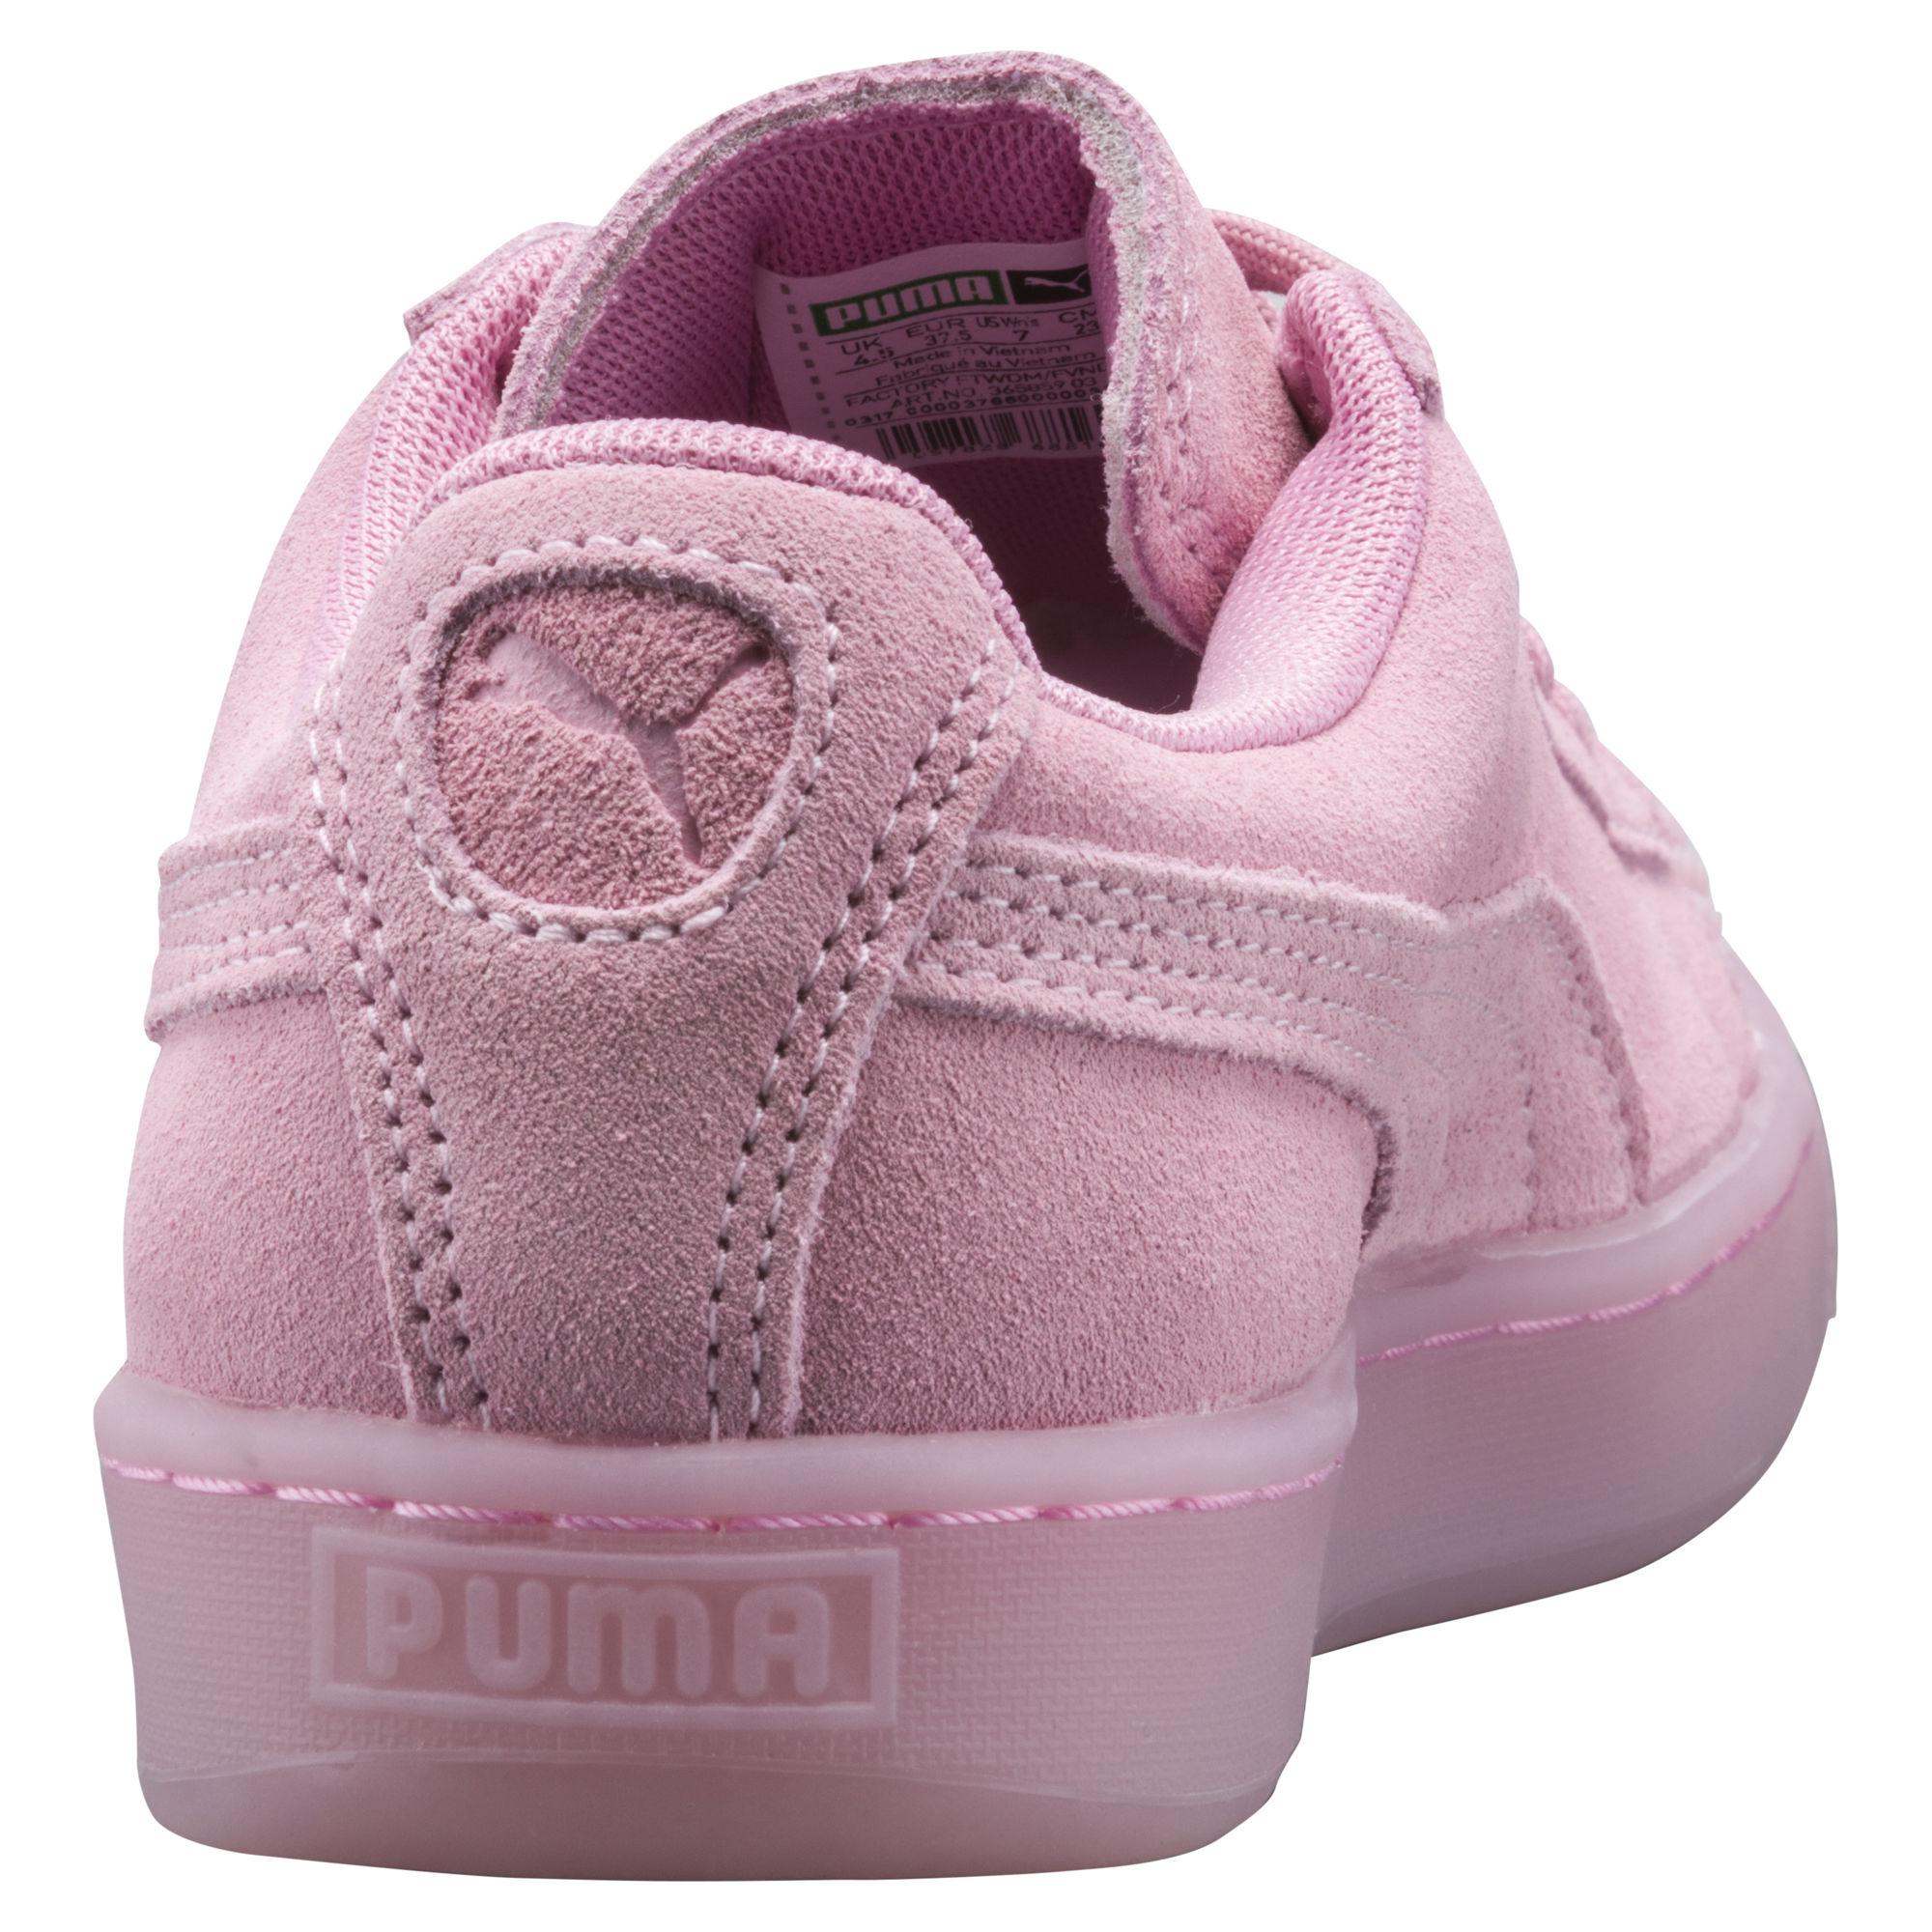 PUMA Suede Jelly Women's Sneakers in Pink | Lyst